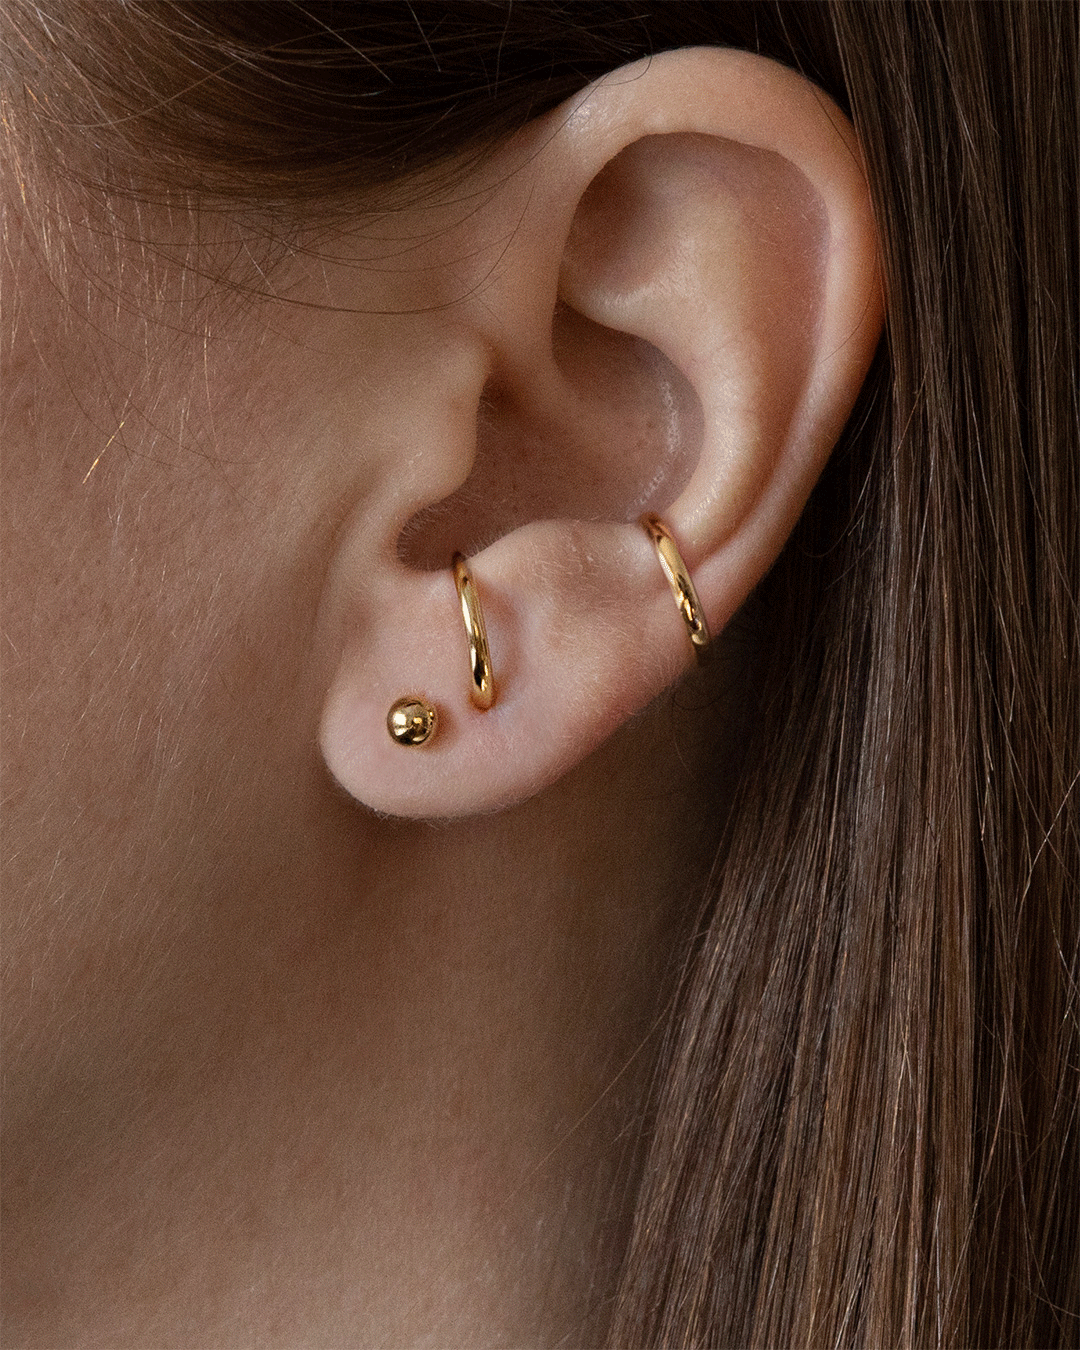 Details 198+ earring studs for ear piercing